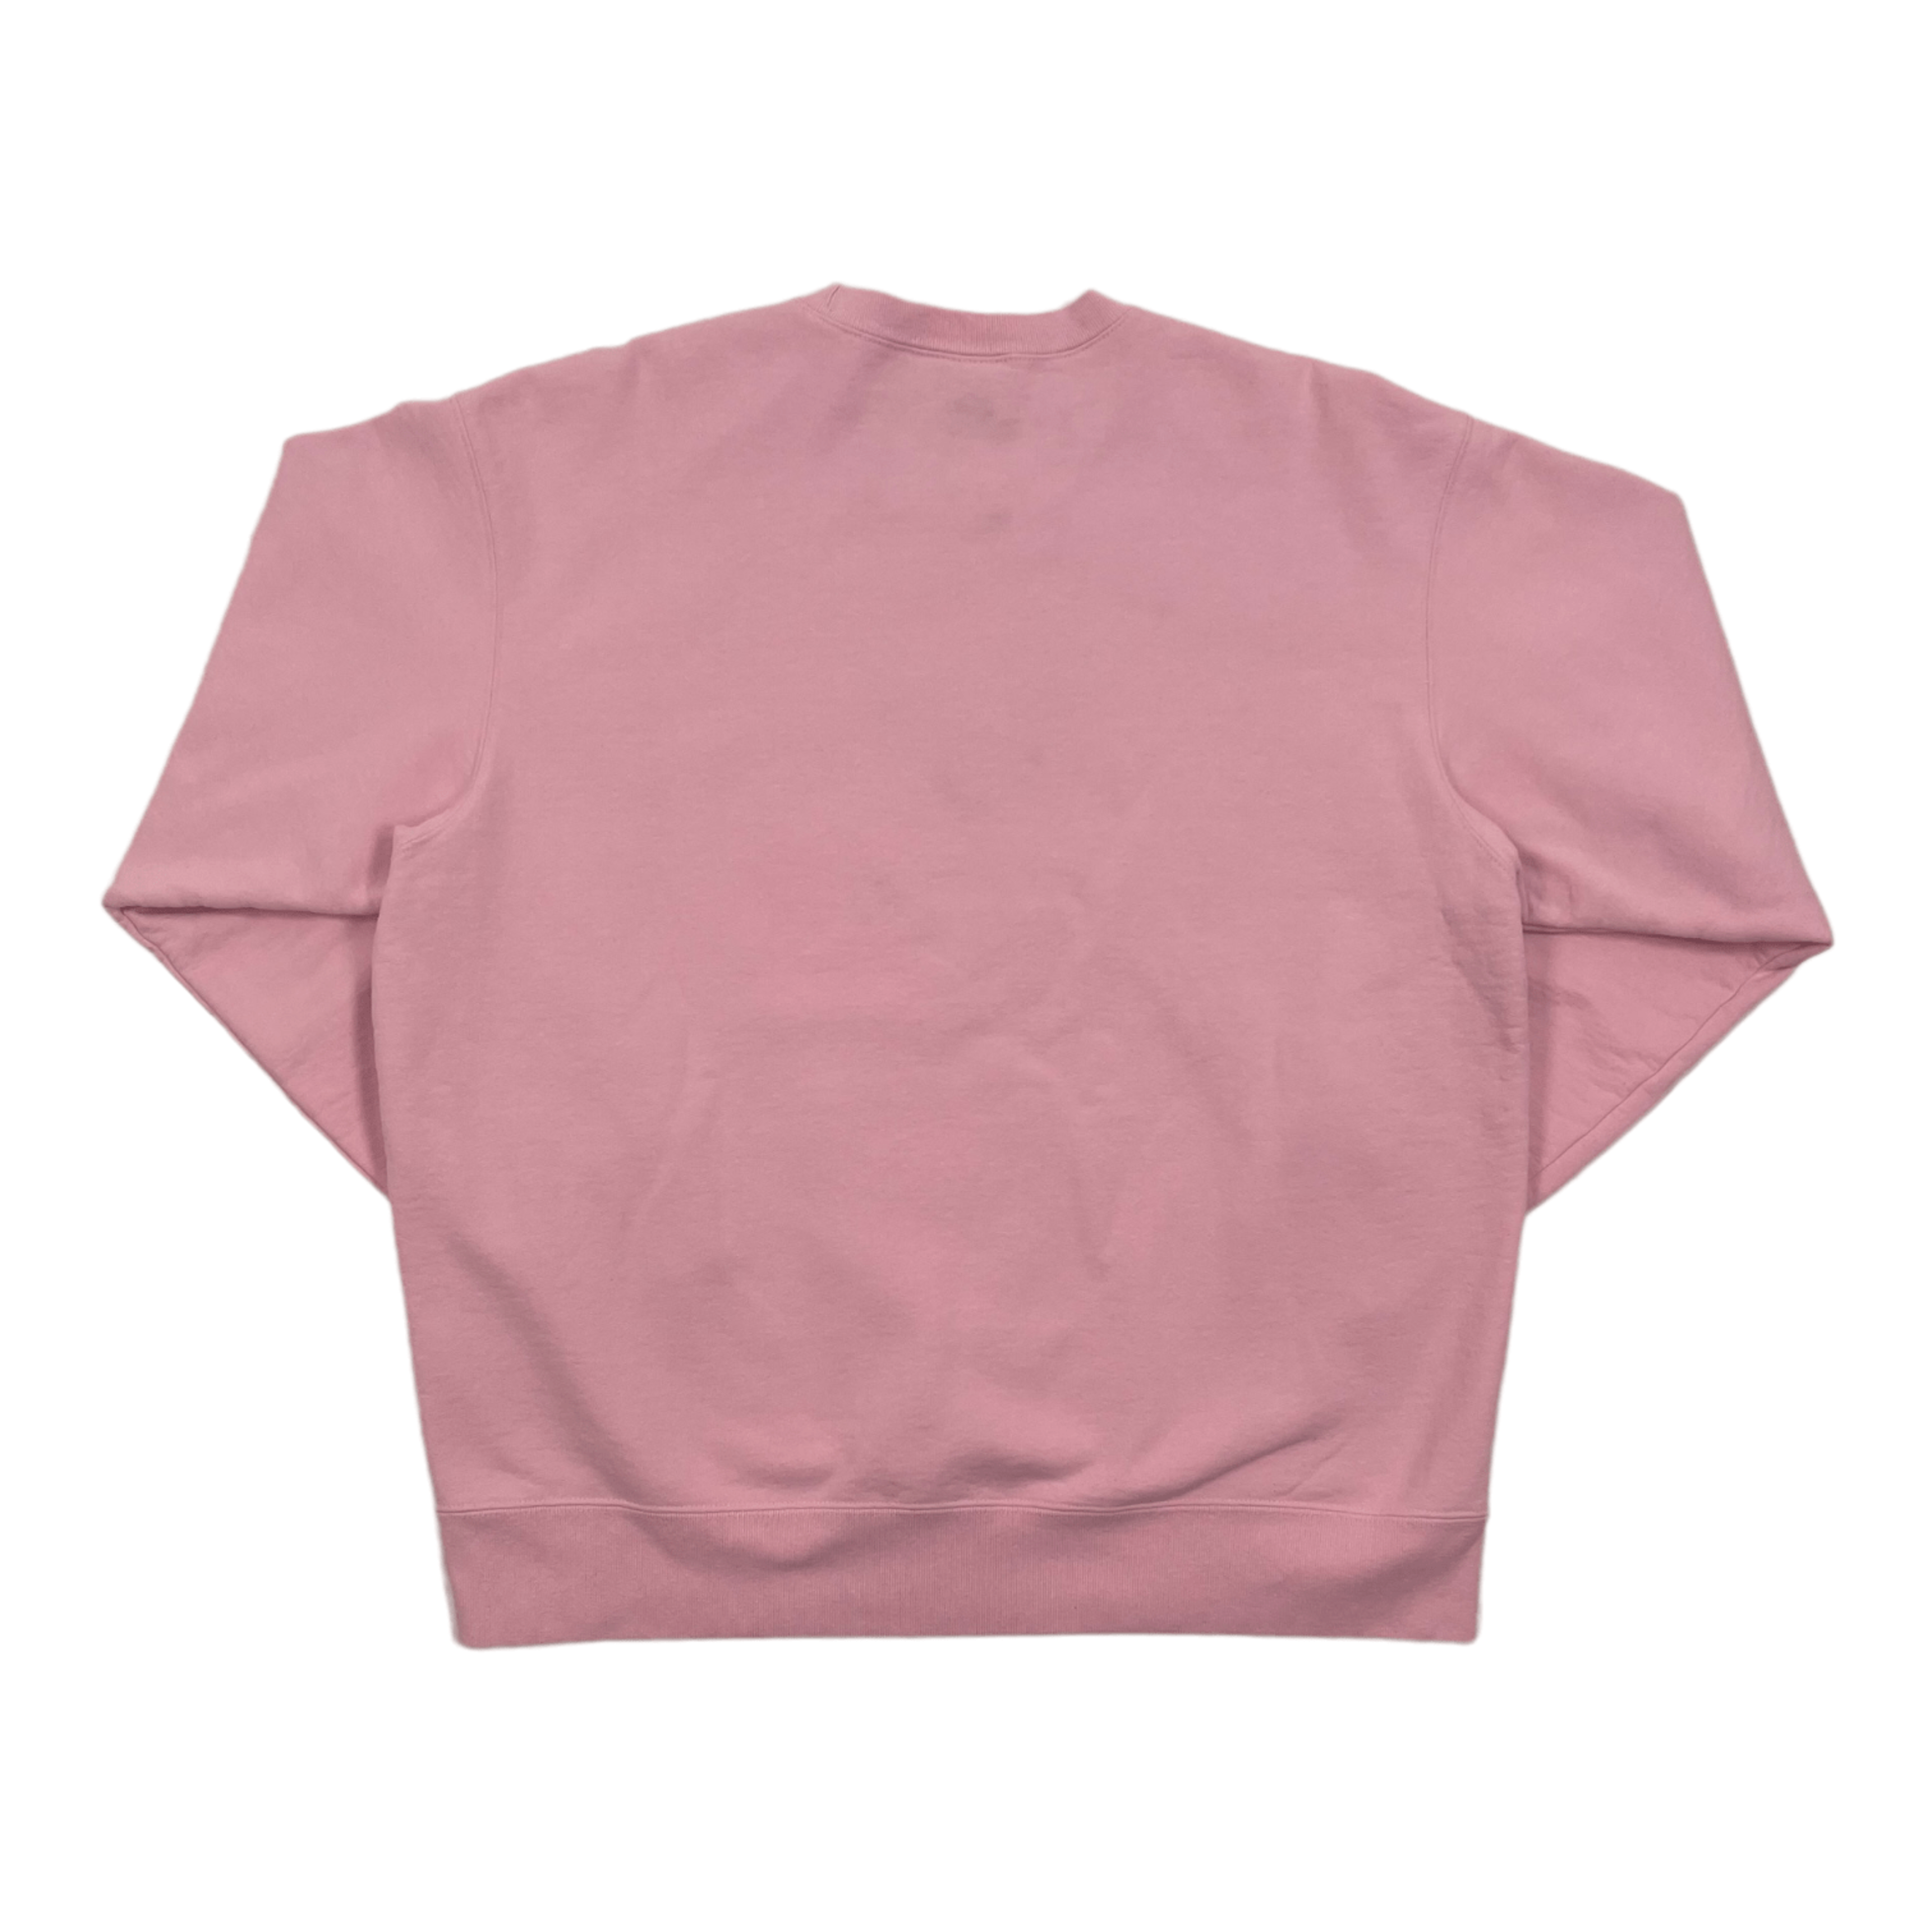 Alternate View 1 of Supreme Overlap Crewneck Sweatshirt Light Pink Pre-Owned